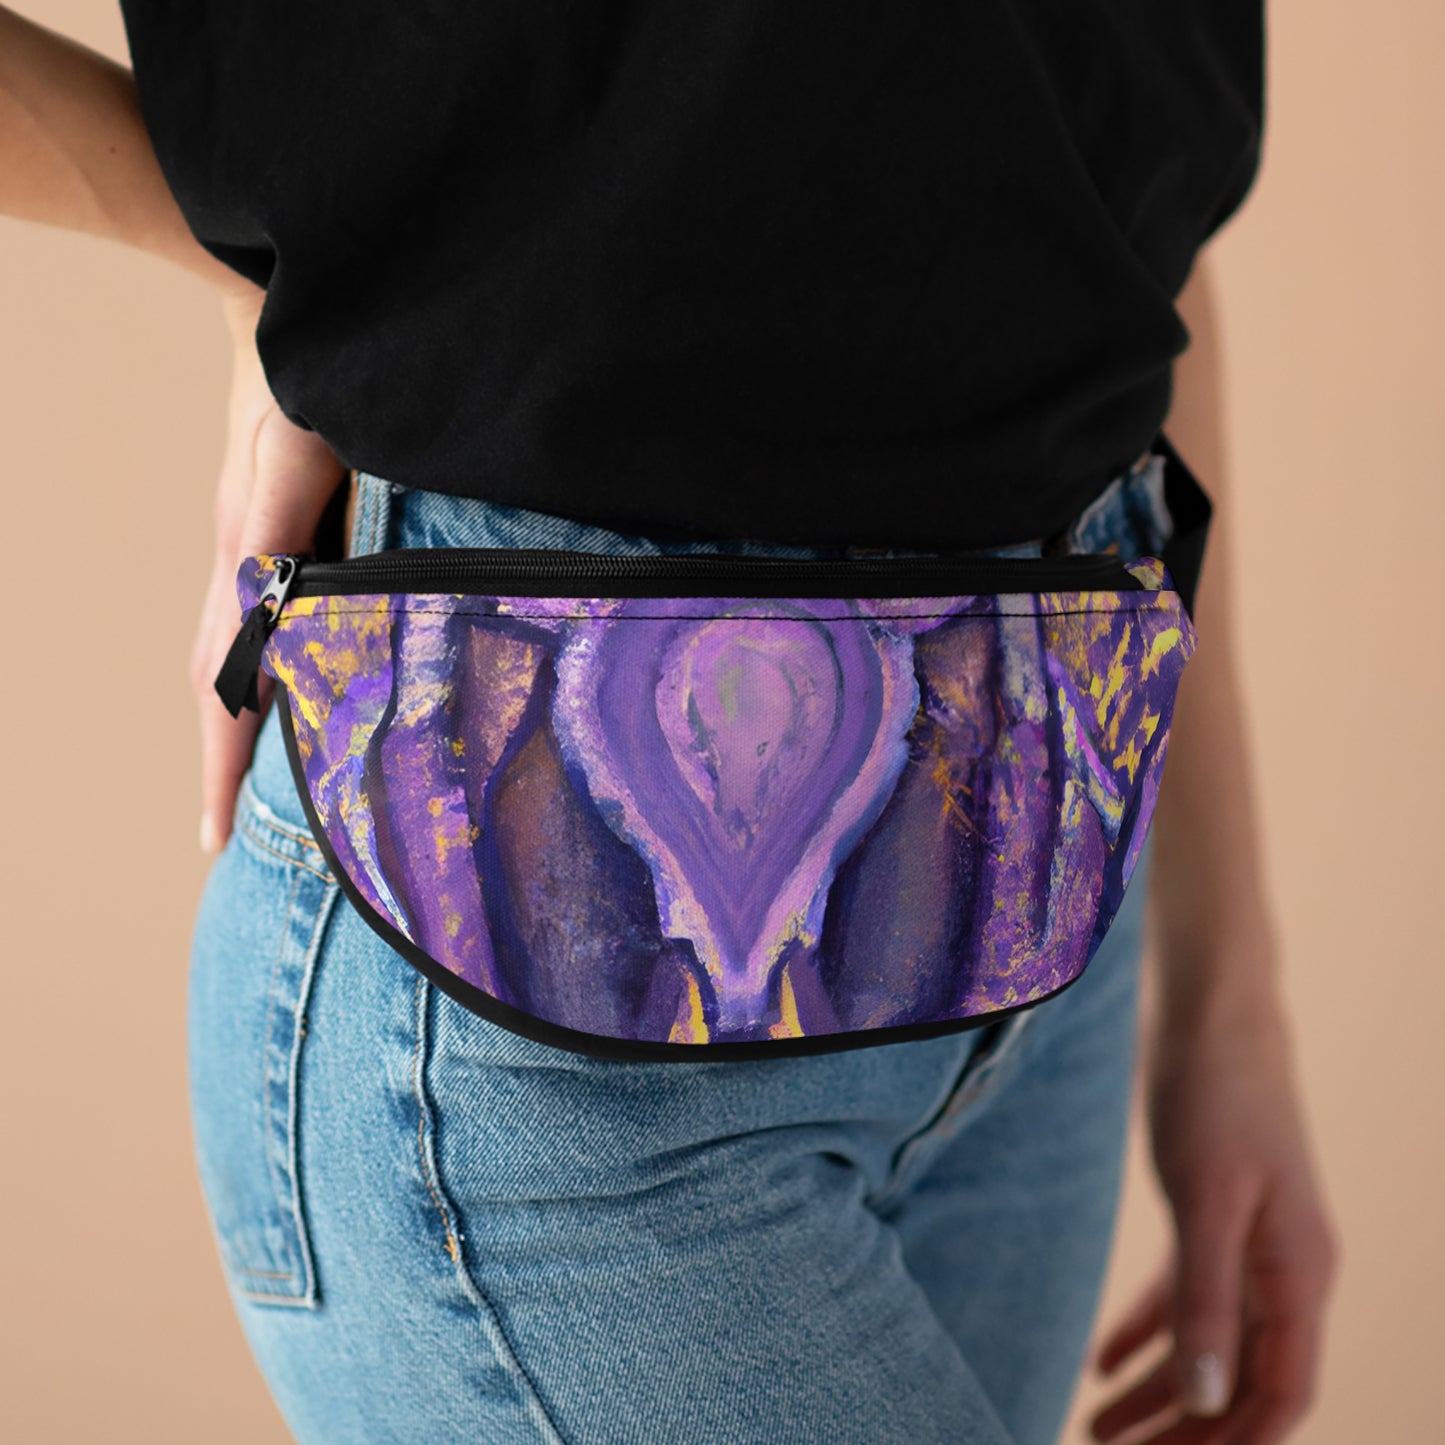 FleurGlamoureuse - LGBTQ+ Fanny Pack Belt Bag